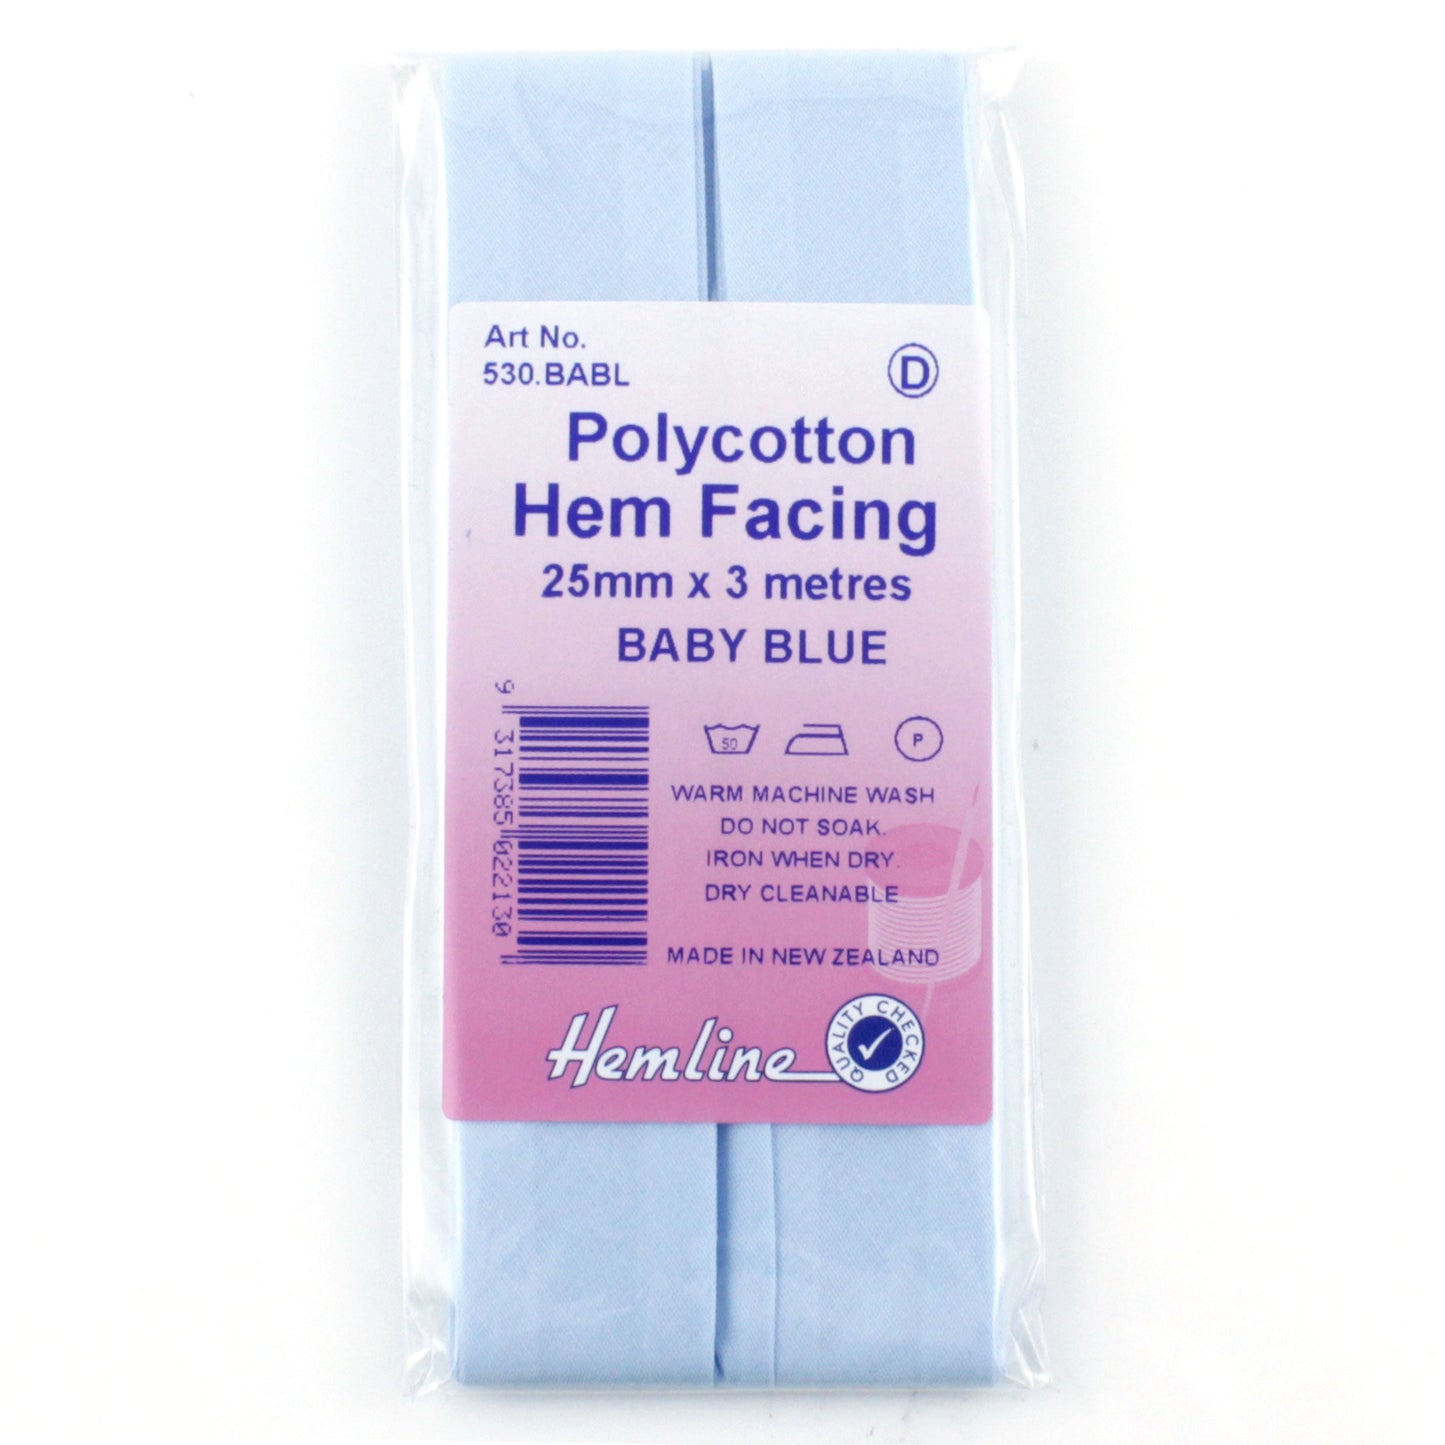 Hemline Polycotton Hem Facing Baby Blue